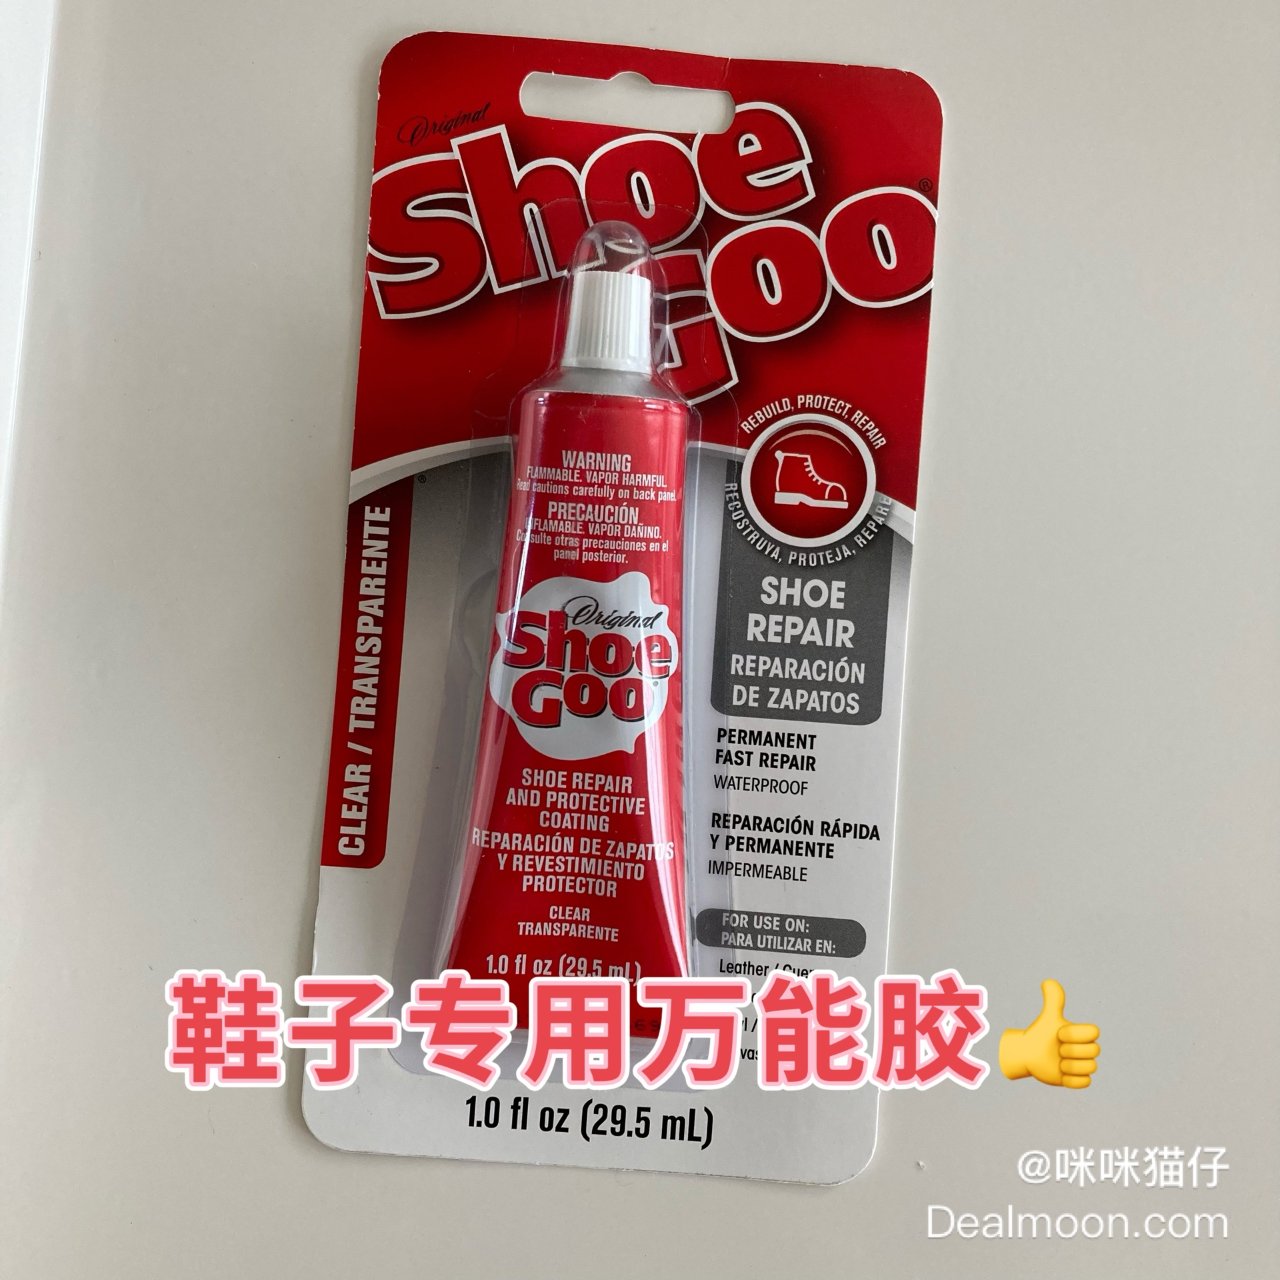 Eclectic 1oz Shoe Goo Glue : Target